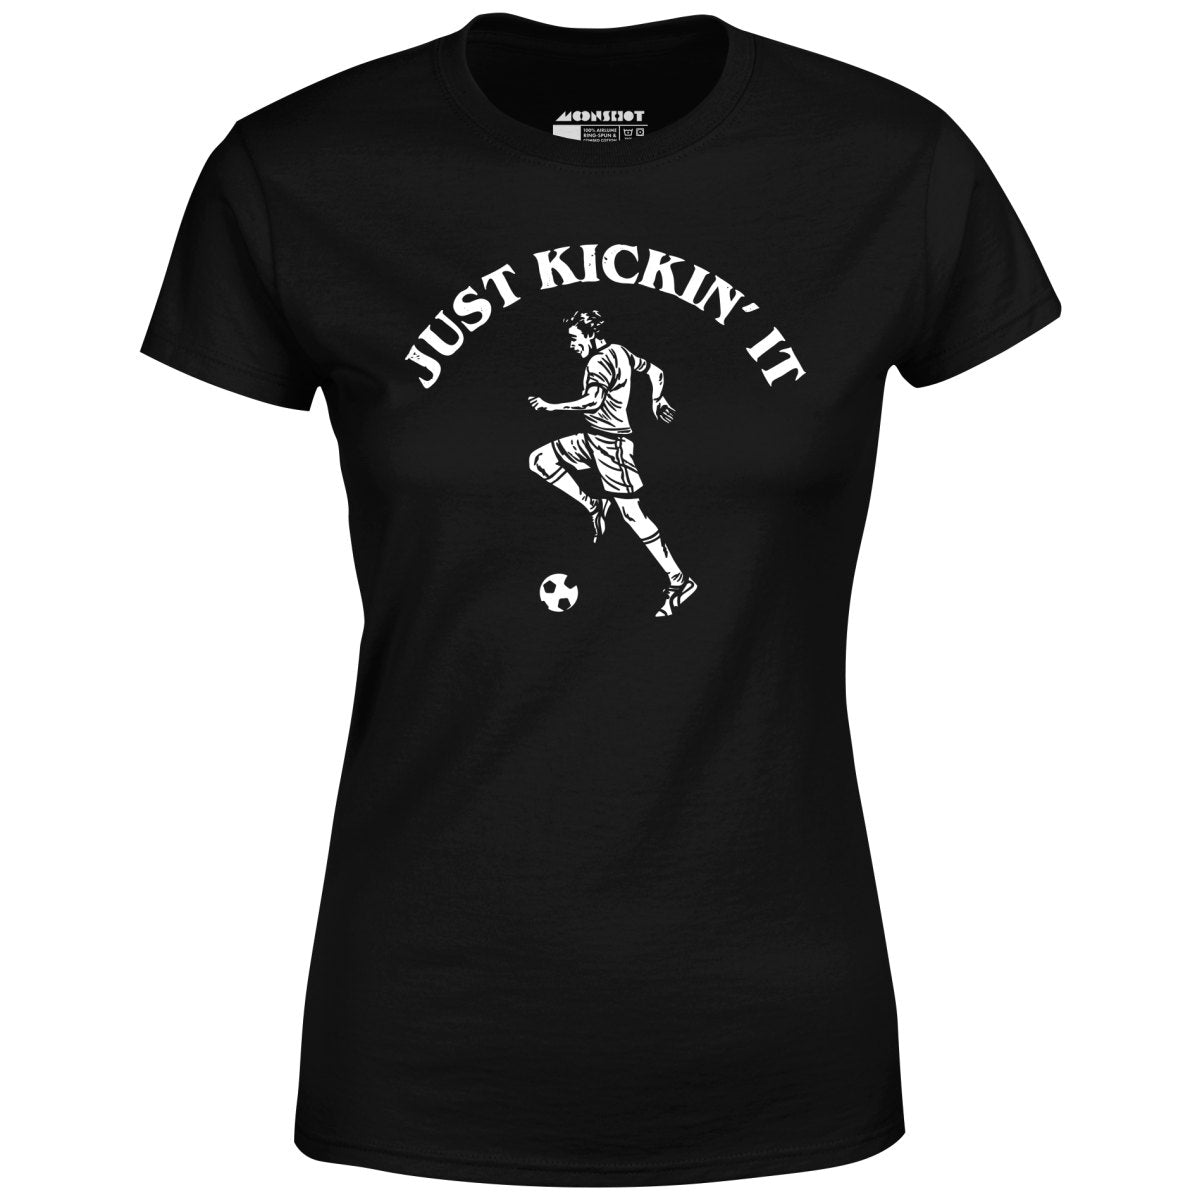 Just Kickin' It - Women's T-Shirt